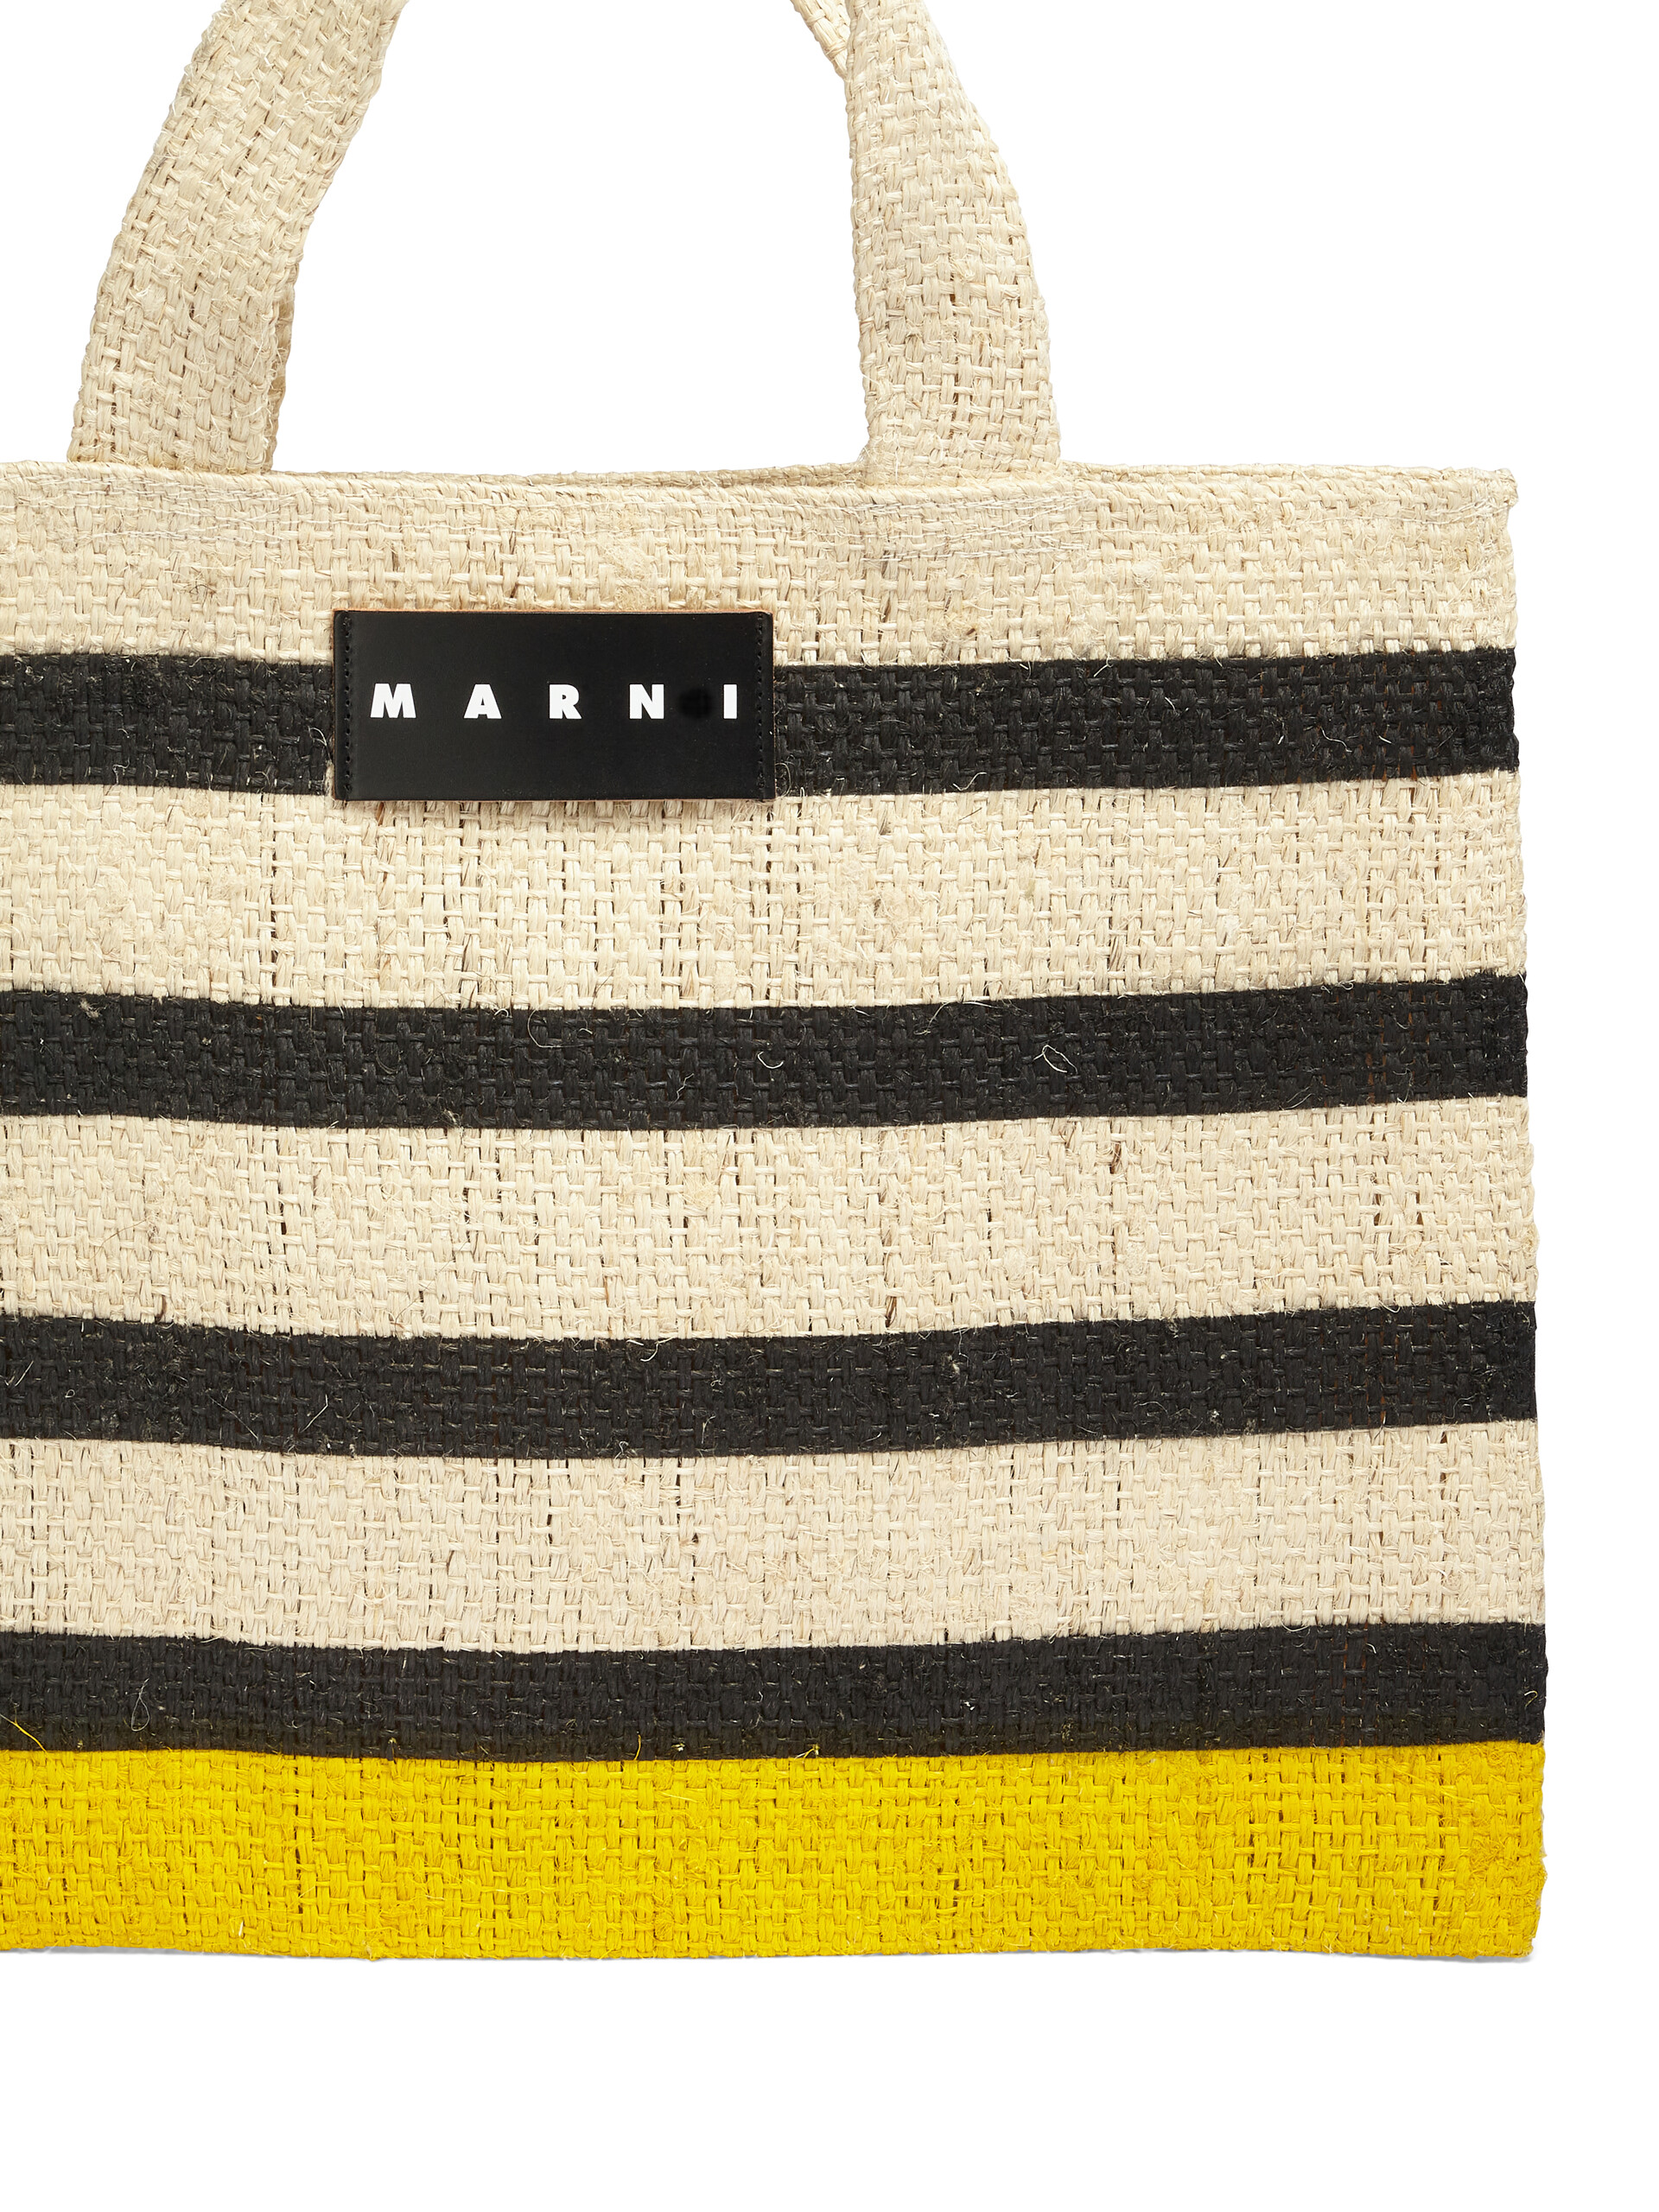 MARNI MARKET small bag in black and yellow natural fiber - Bags - Image 4